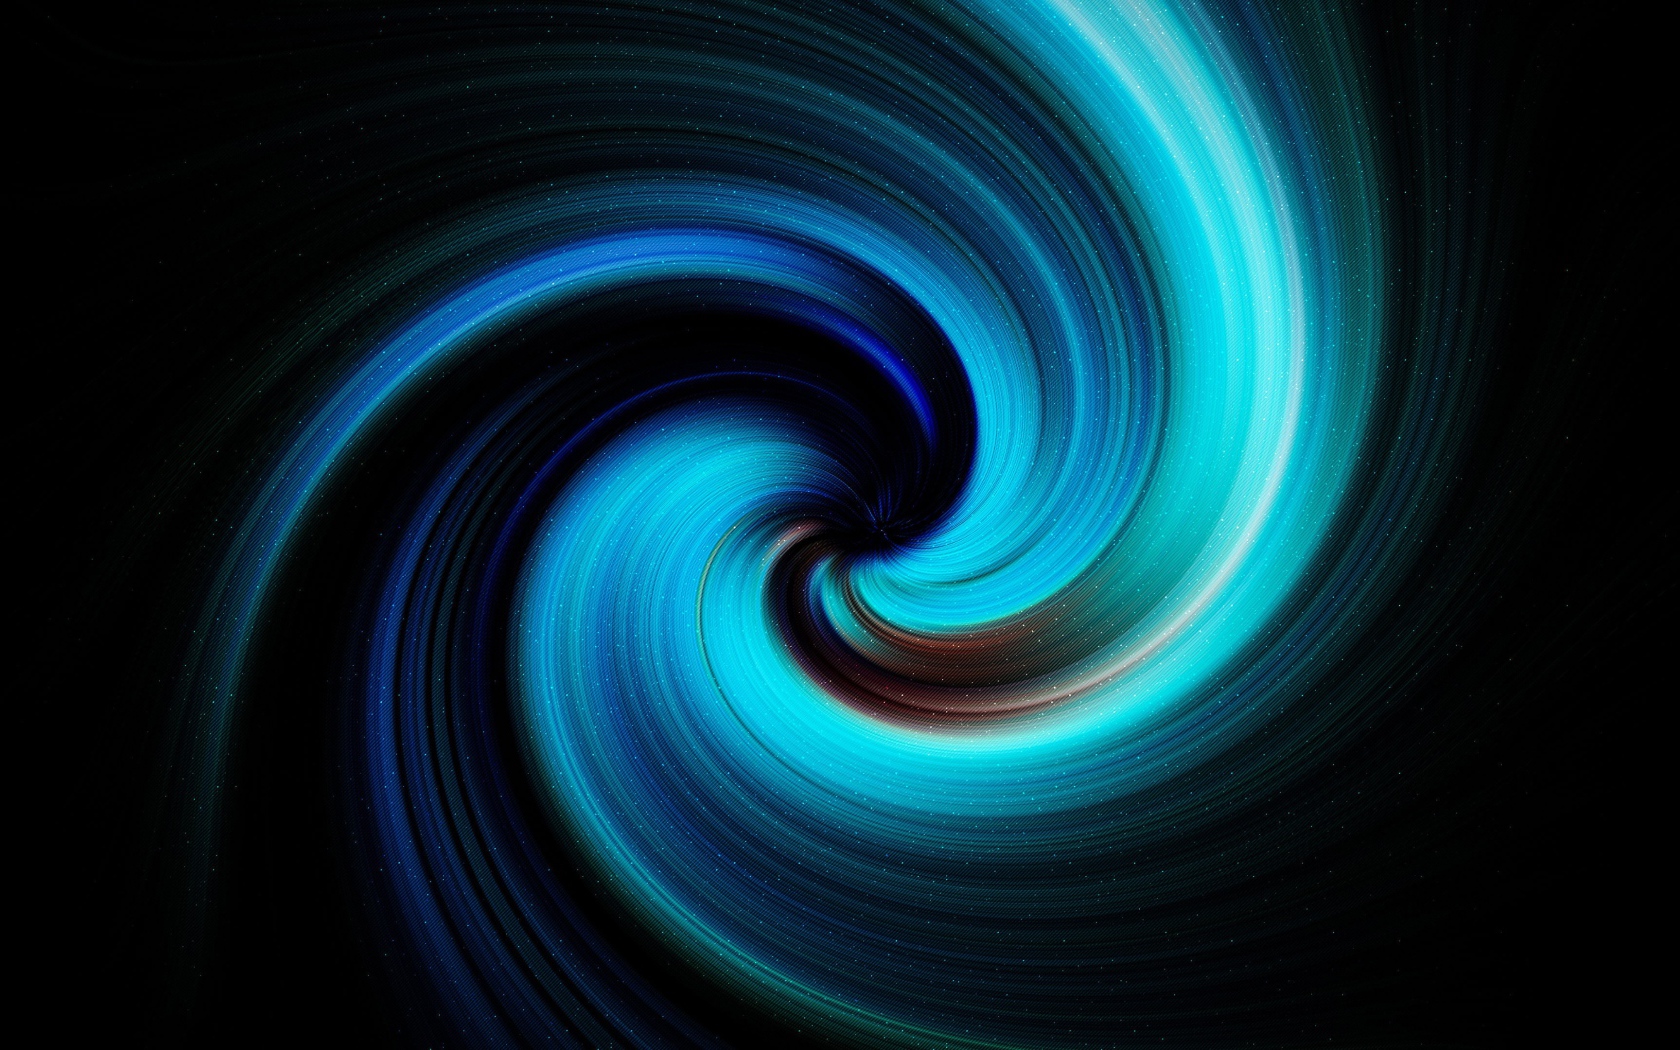 Neon spiral on a black background